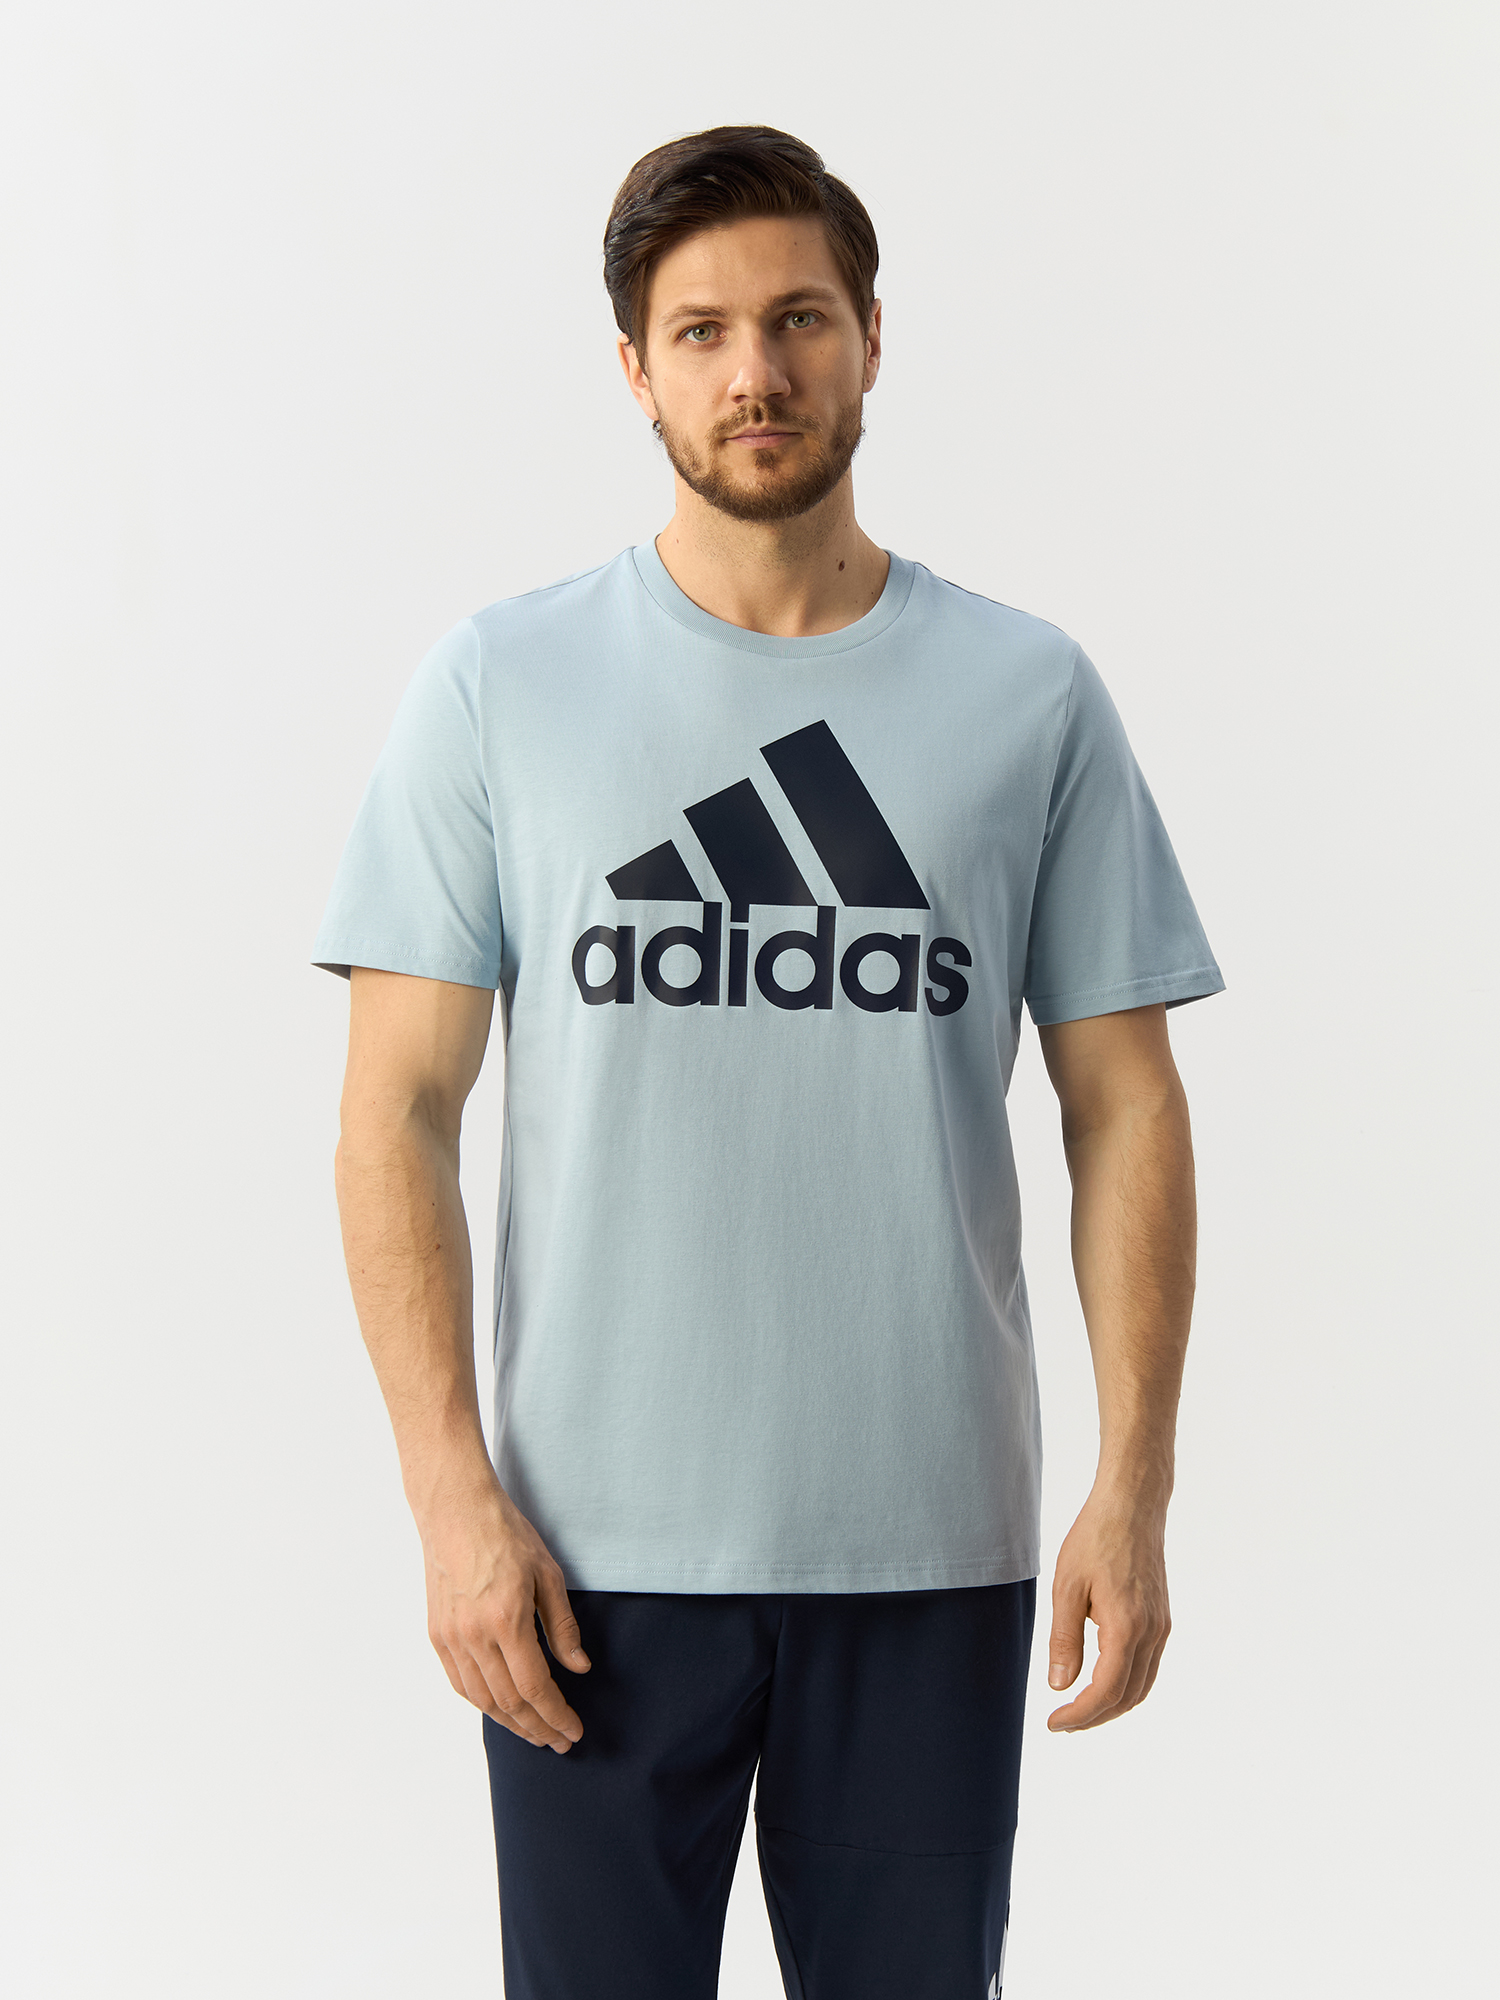 Футболка Adidas для мужчин, IS1303, размер M, серая-AEWP